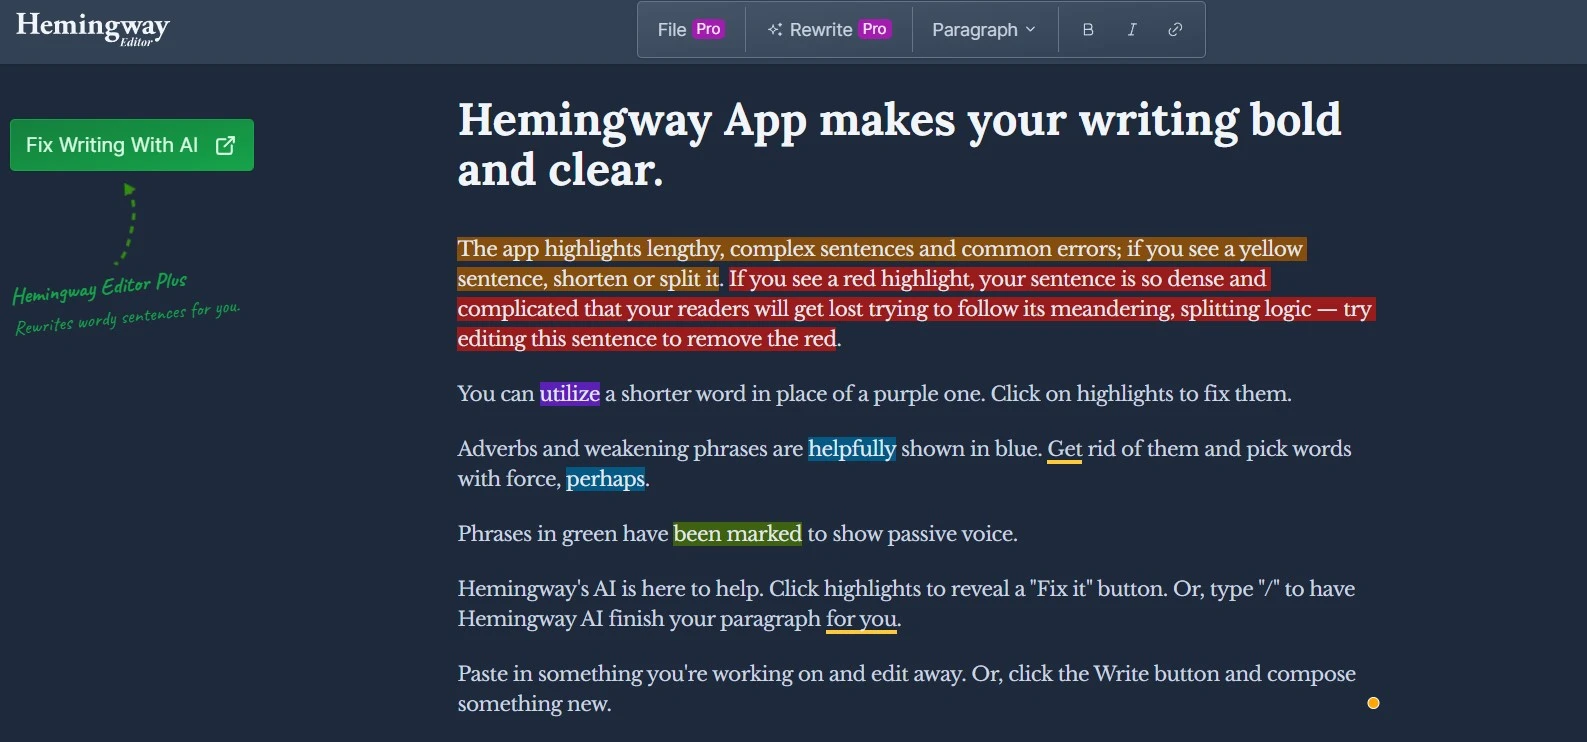 Hemingway Email Writing Software